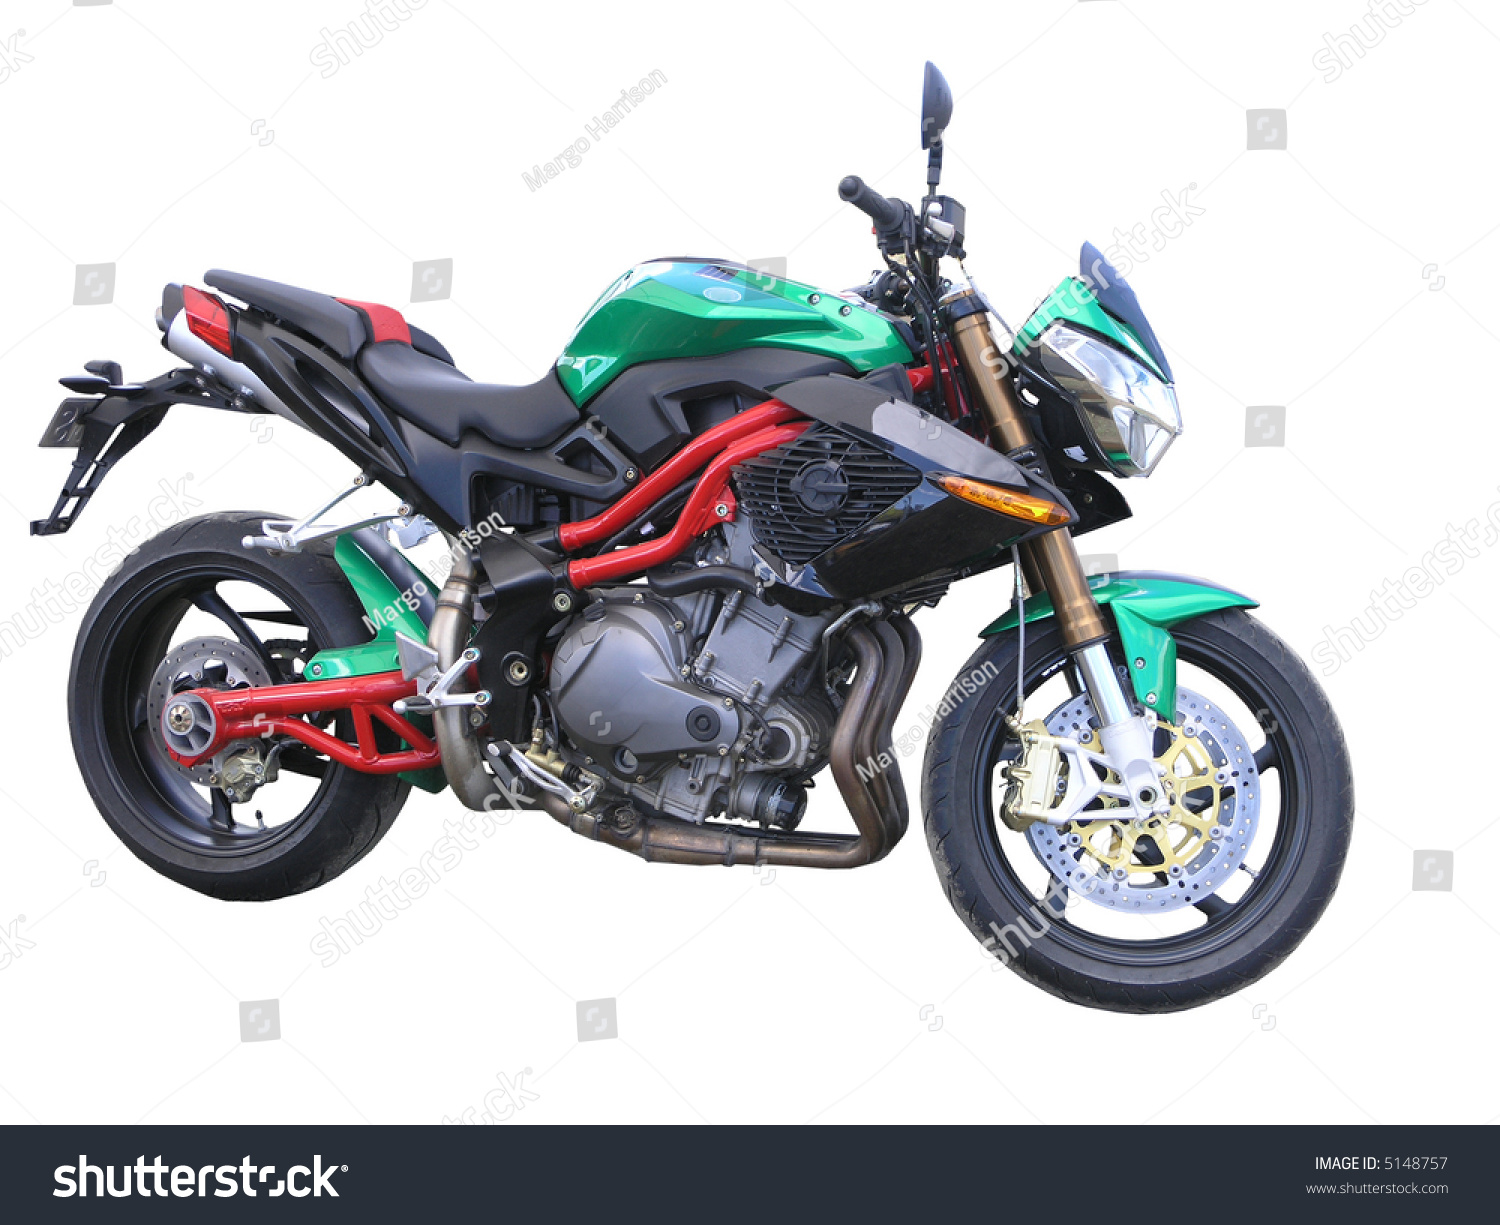 A Green Benelli Motorbike Stock Photo 5148757 : Shutterstock